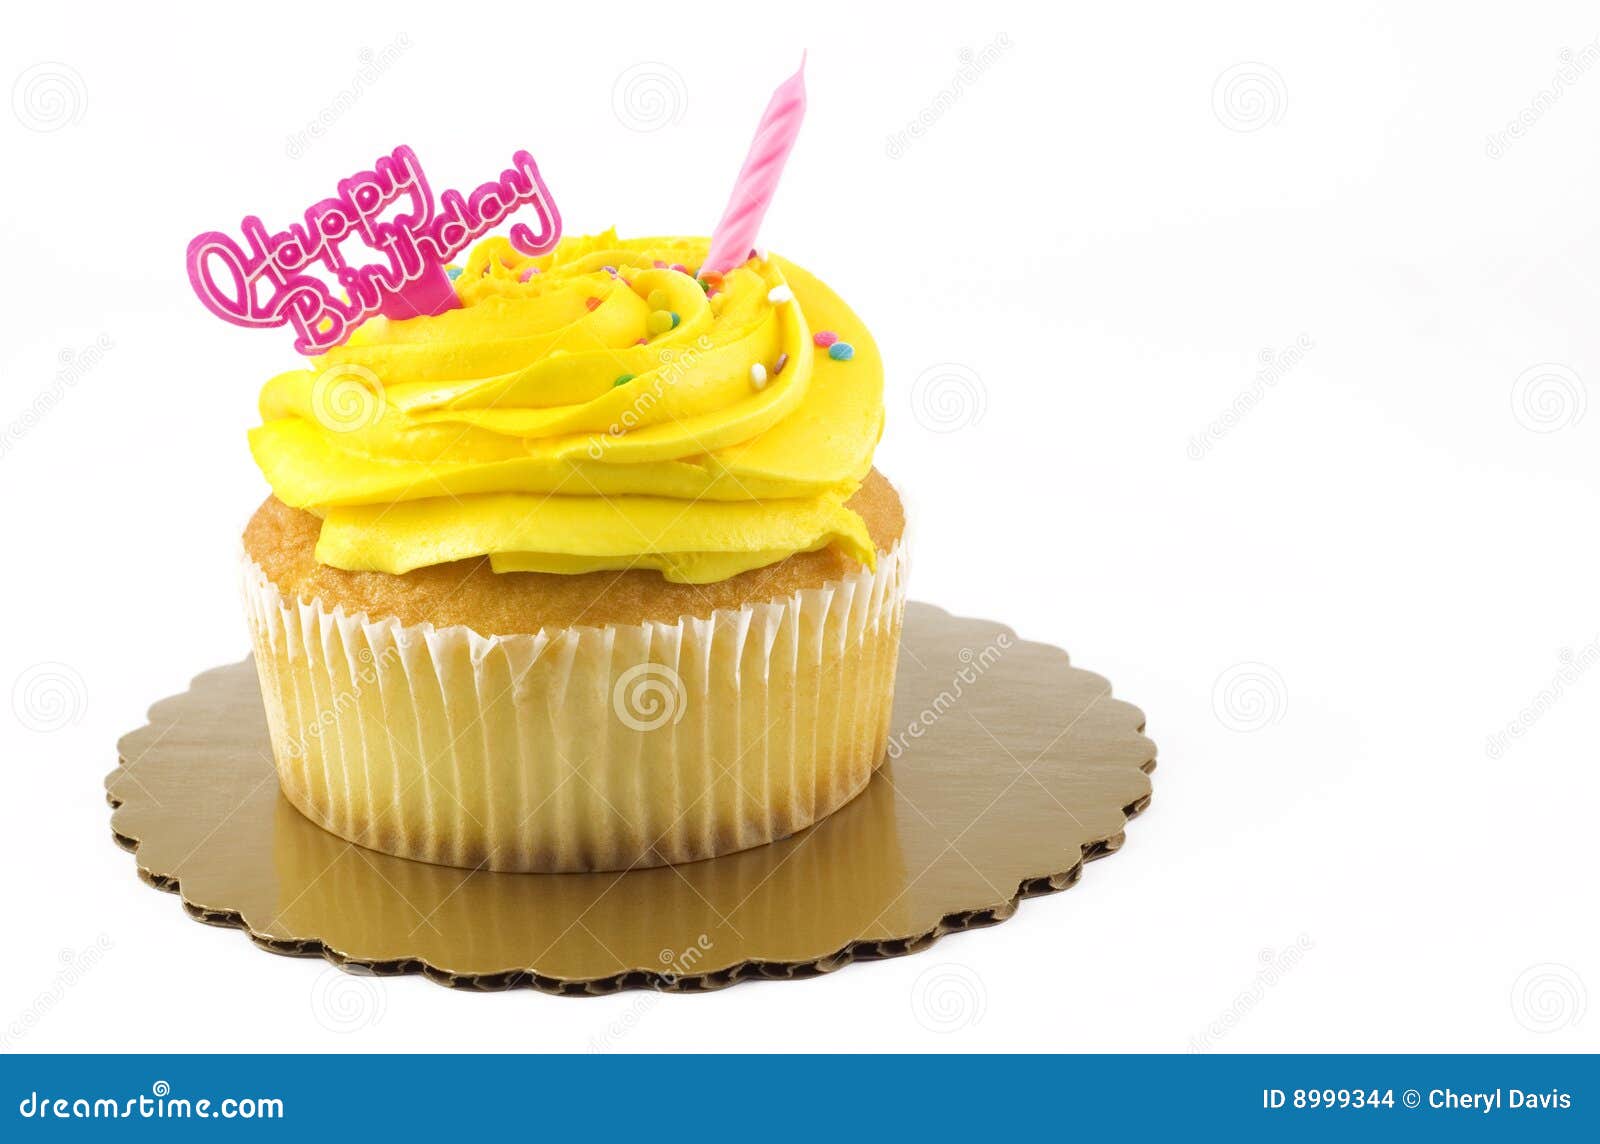 Happy Birthday Cupcake Stock Photo. Image Of Cupcake, Bake - 8999344